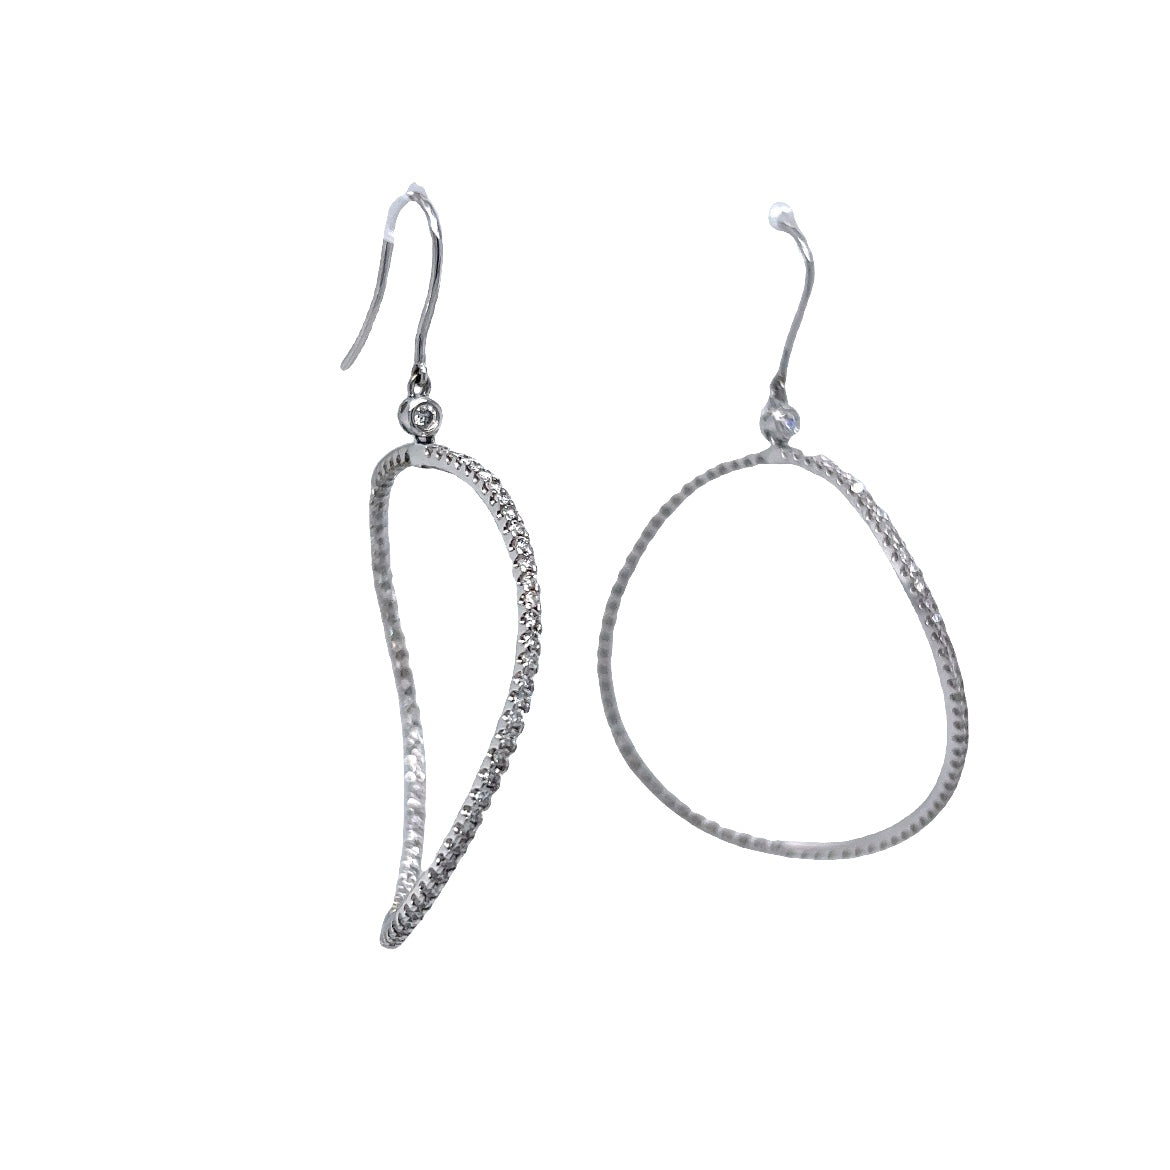 1.64 Curved Diamond Hoop Earrings in 18k White Gold